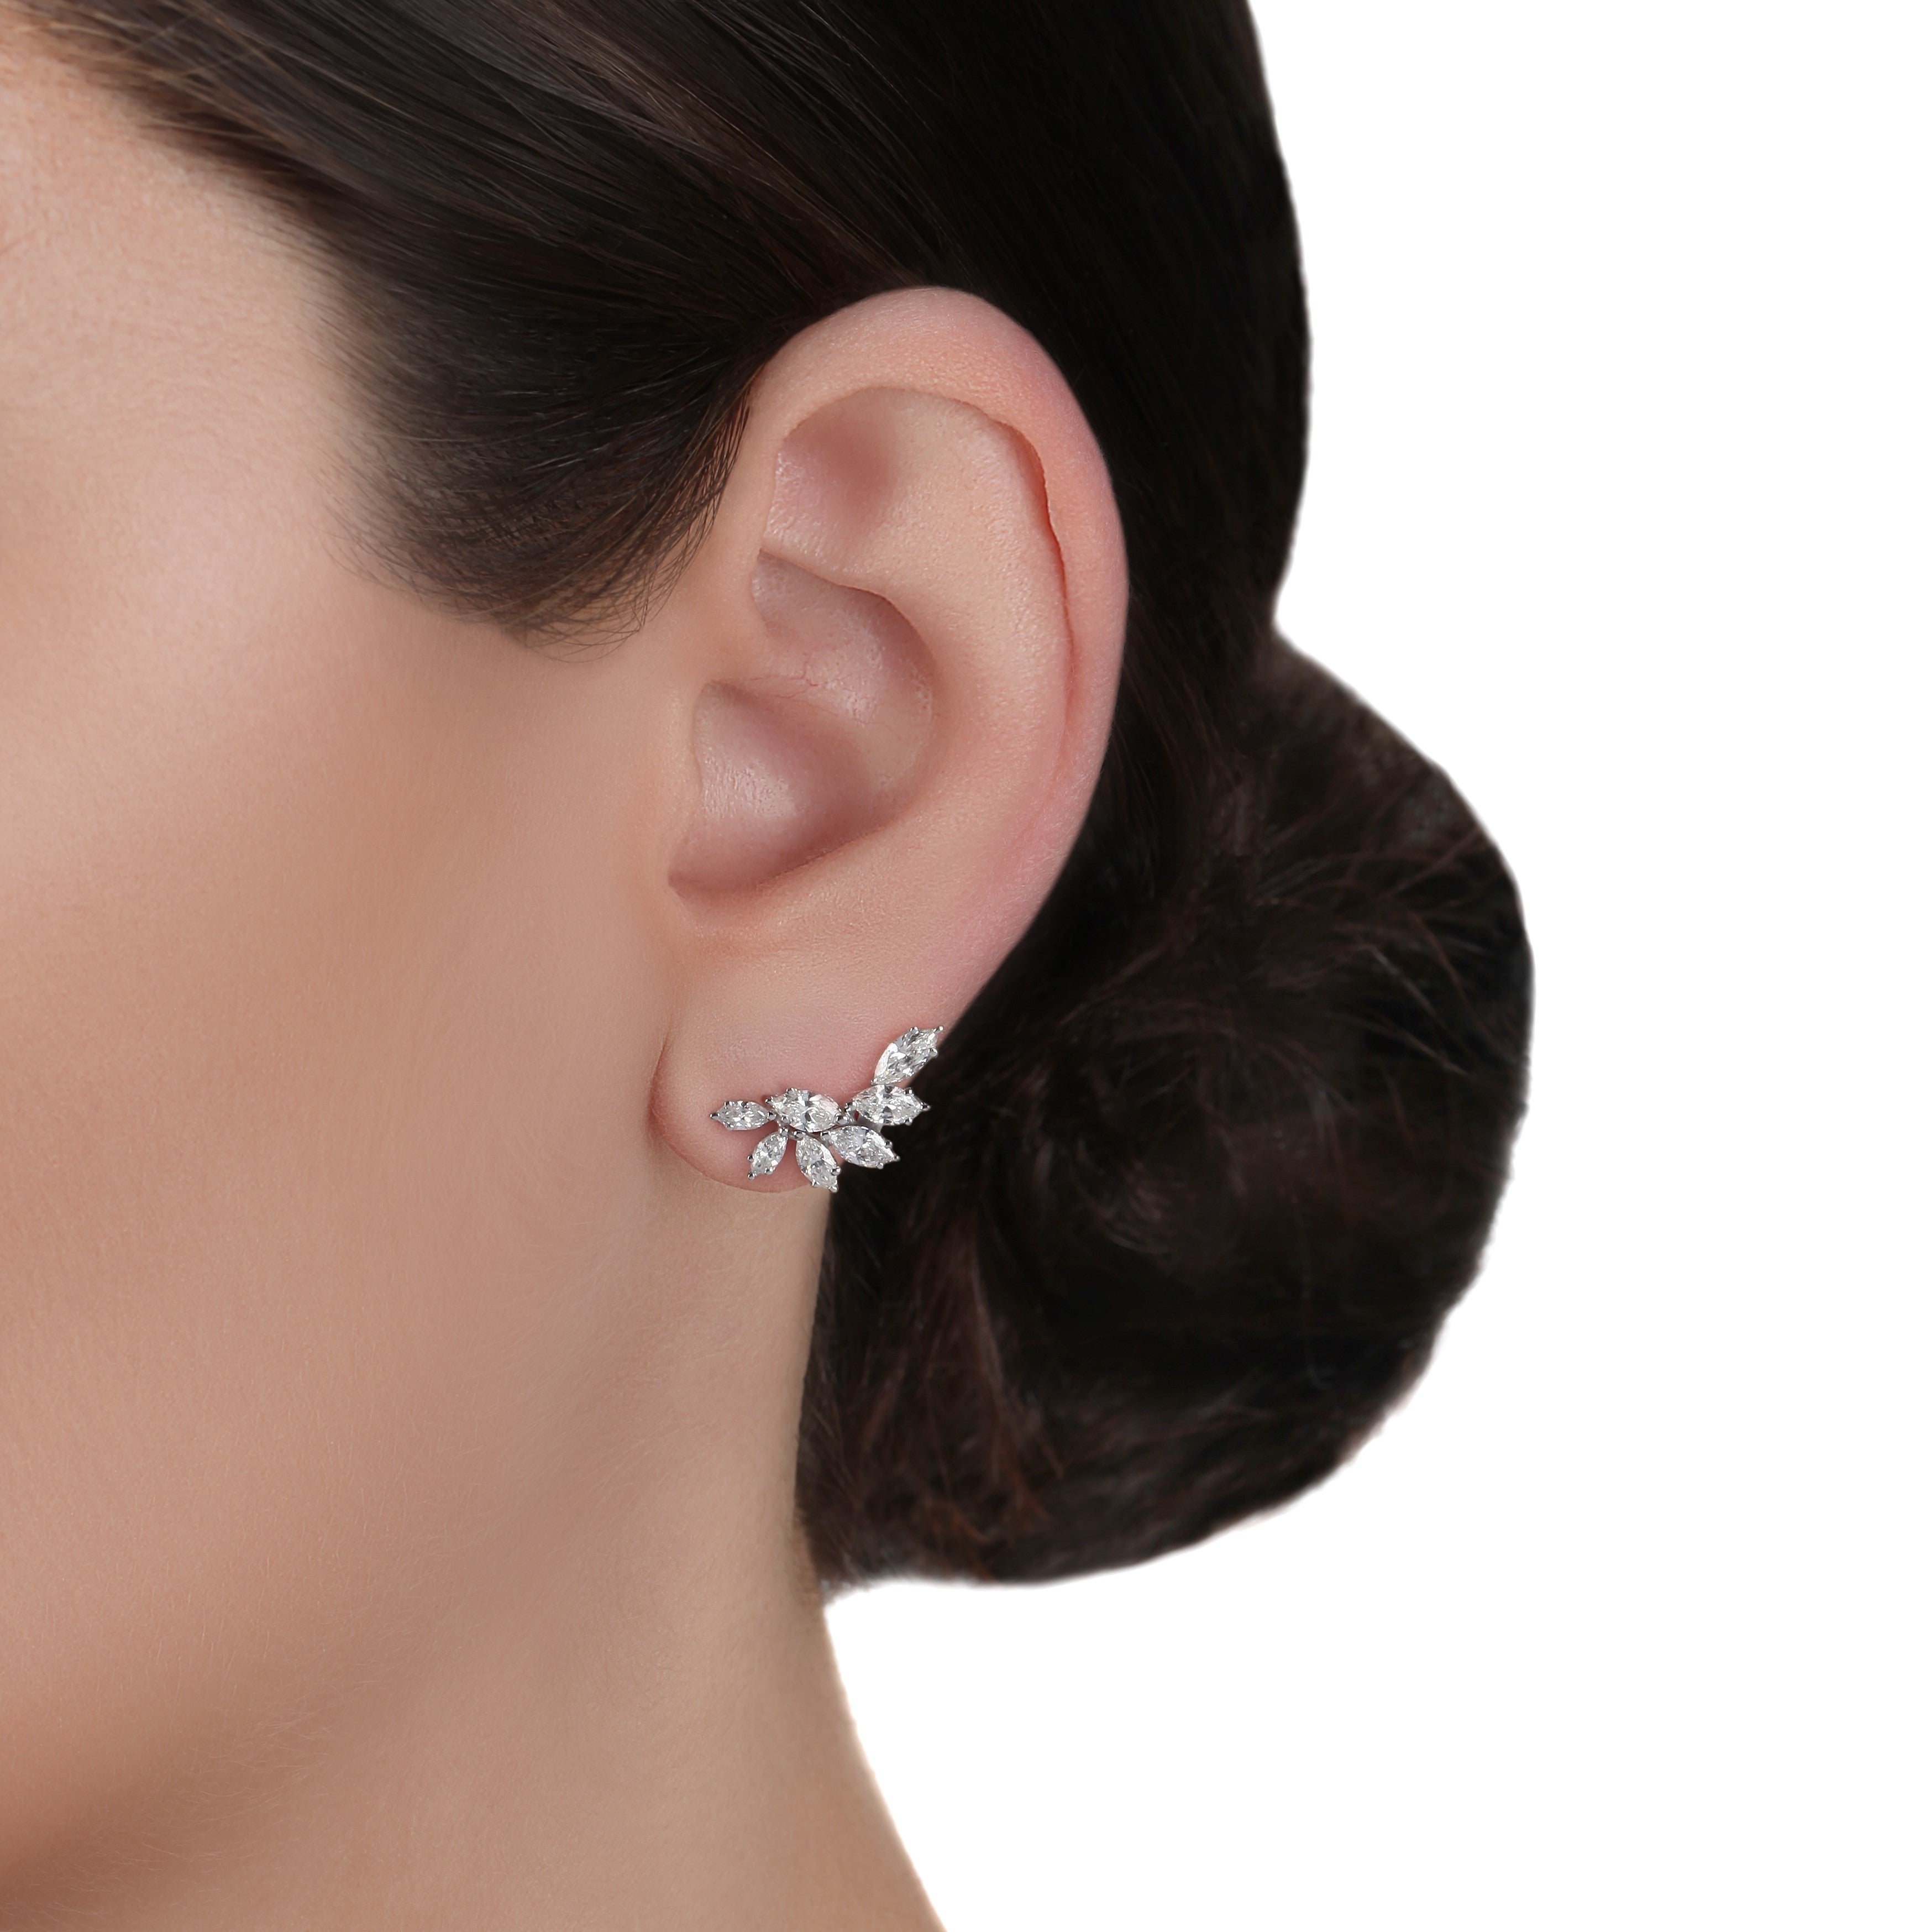 Buy Diamond Earrings Online at JD Houston